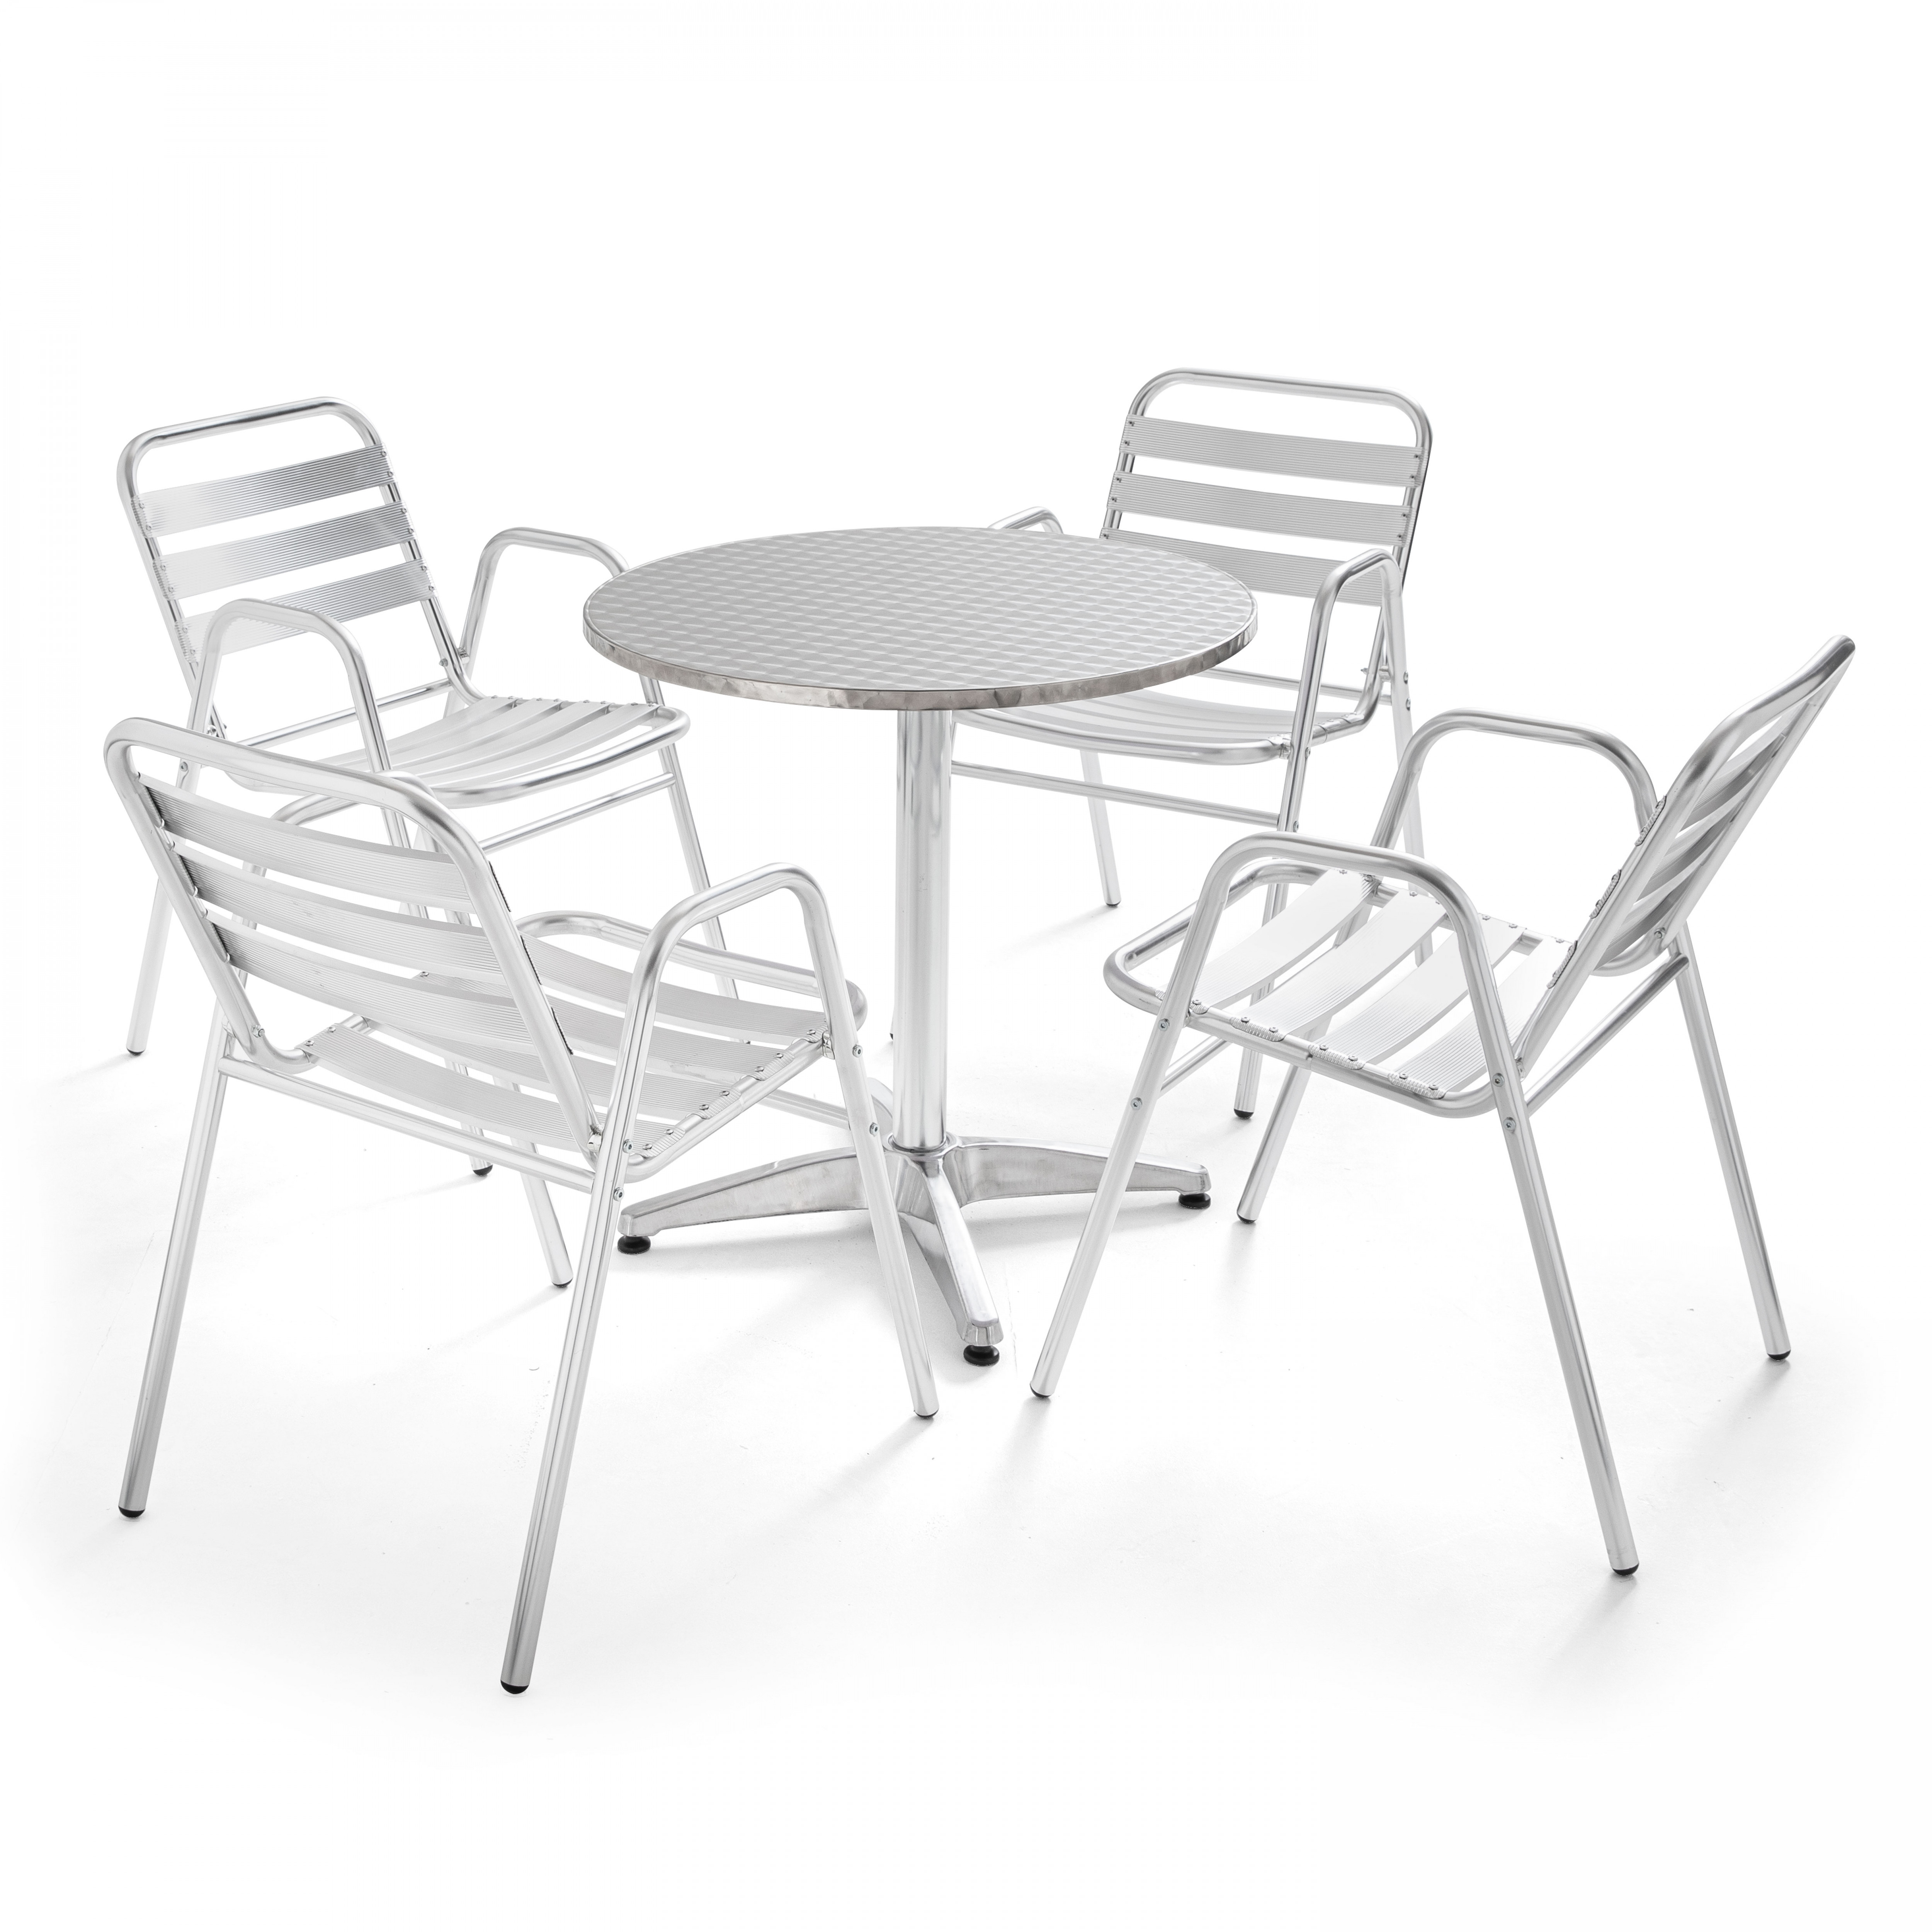 Table de jardin ronde avec 4 fauteuils en aluminium